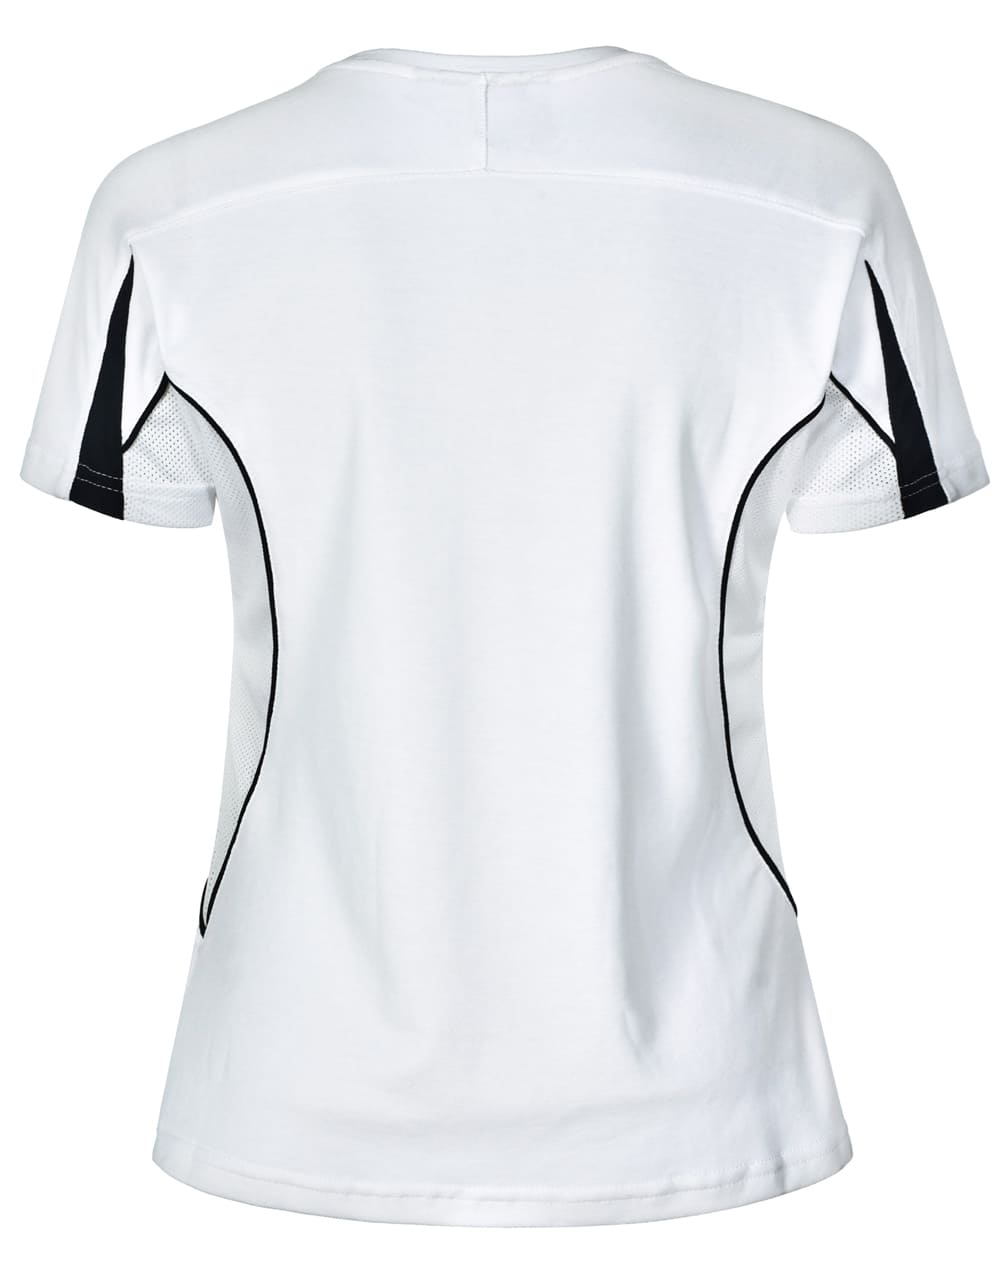 Custom Made (White Navy) Legend Ladies Short Sleeve Tee Shirts Online in Perth